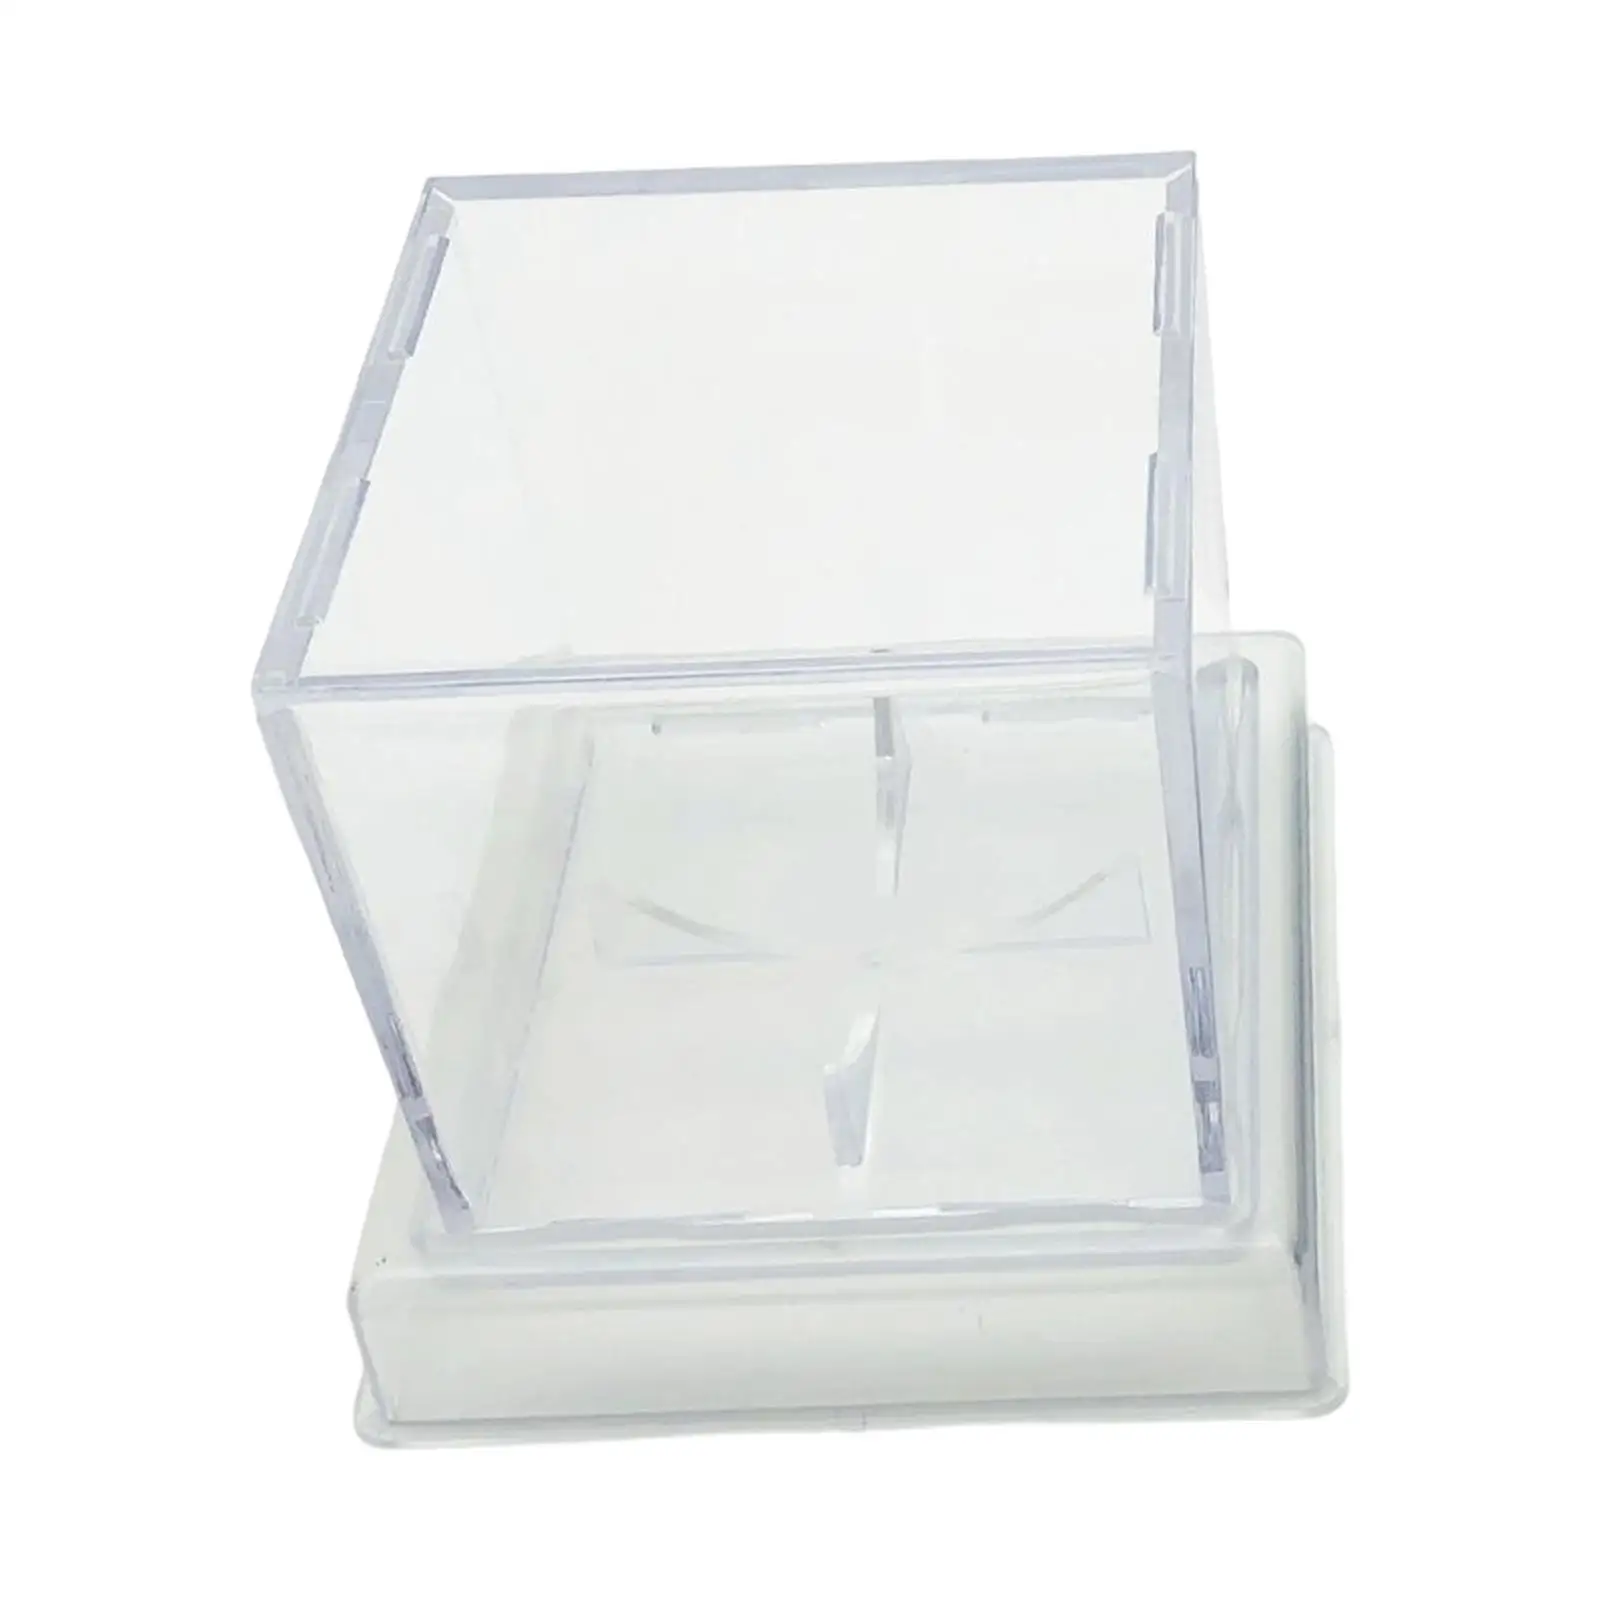 Cube Memorabilia Showcase Acrylic Box for Display for Doll Golf Ball Bedroom